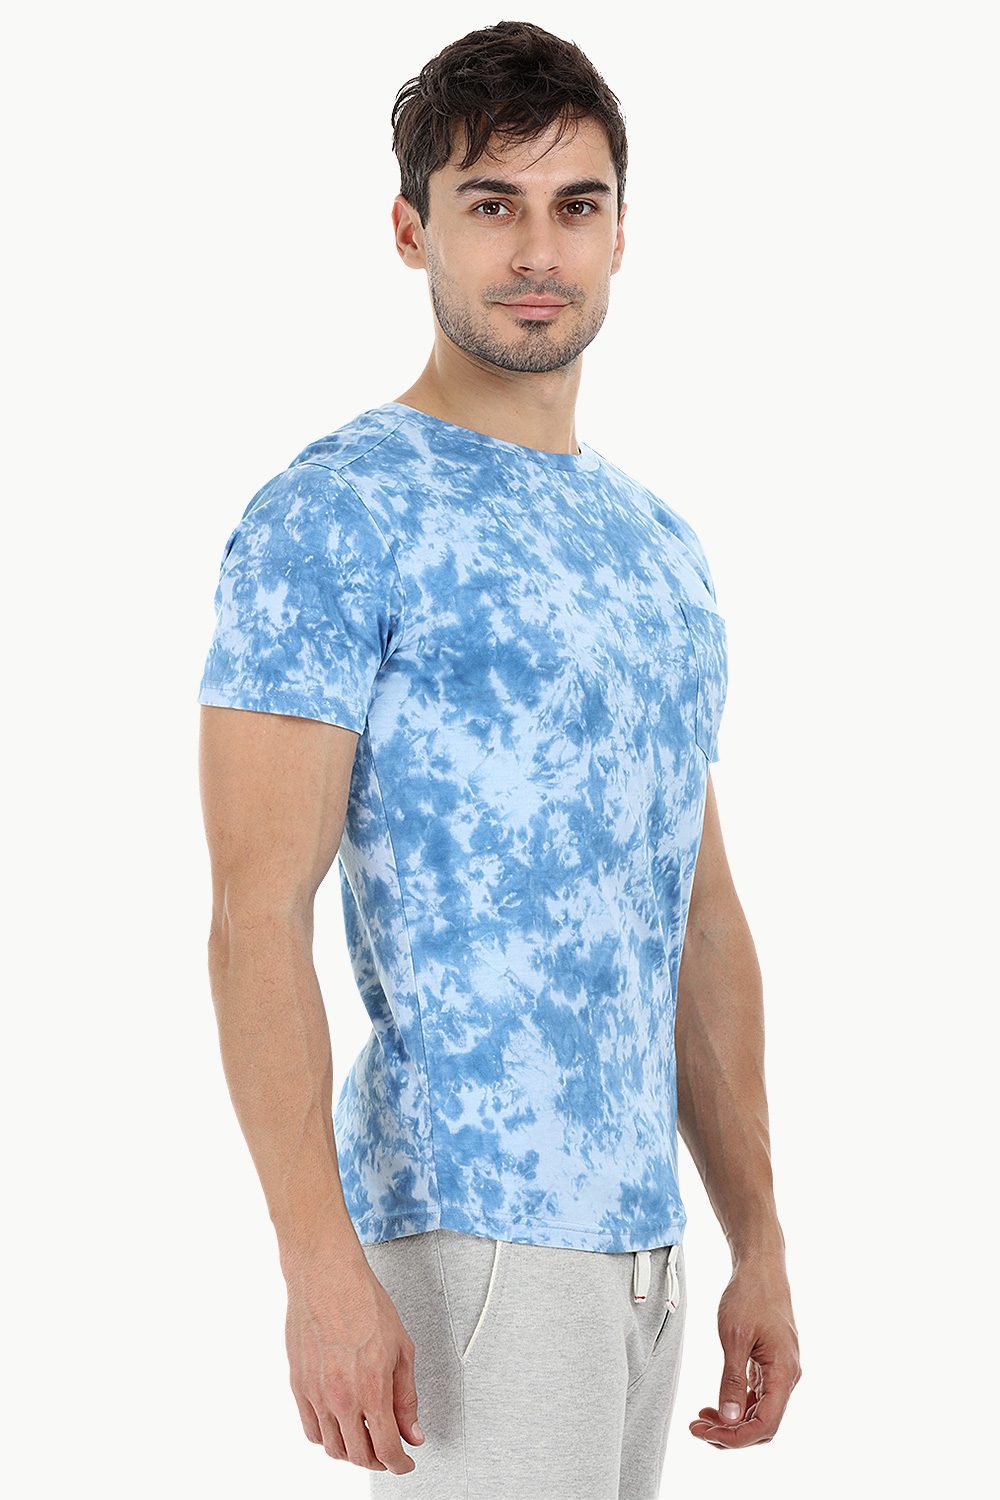 Sky Blue Crumple Blotch Effect Tie Dye T-Shirt for Men Online – Zobello